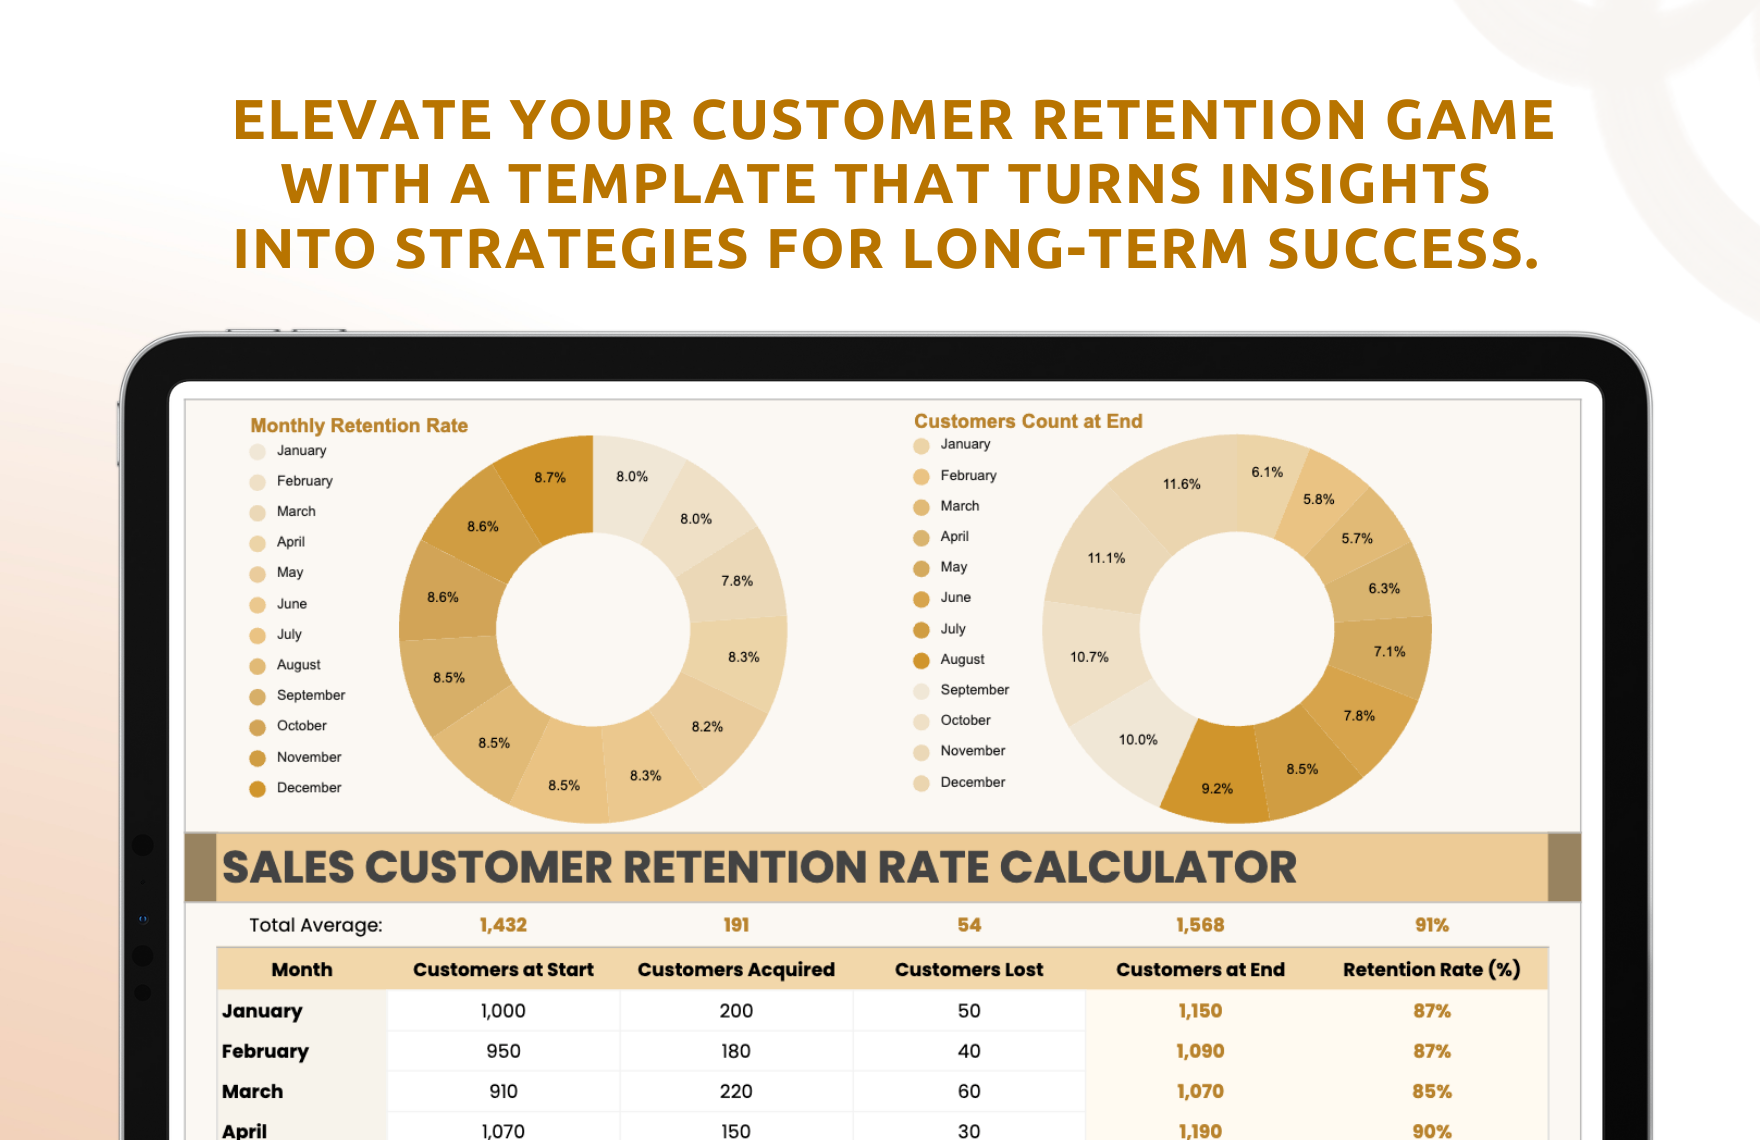 Sales Customer Retention Rate Calculator Template